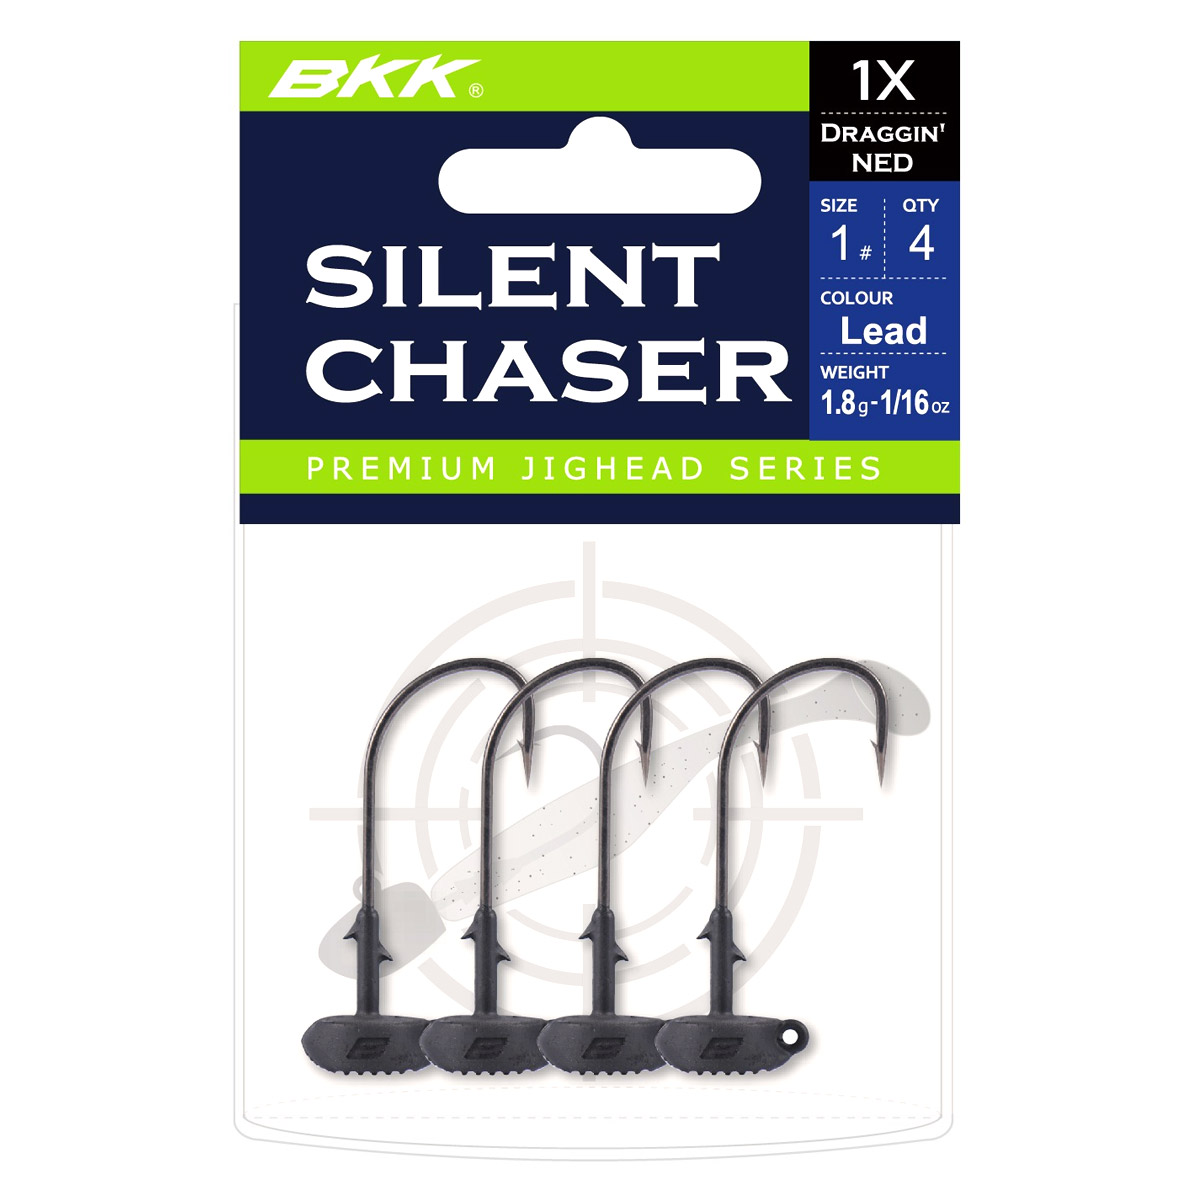 BKK Silent Chaser Draggin' Ned Lead Size 1